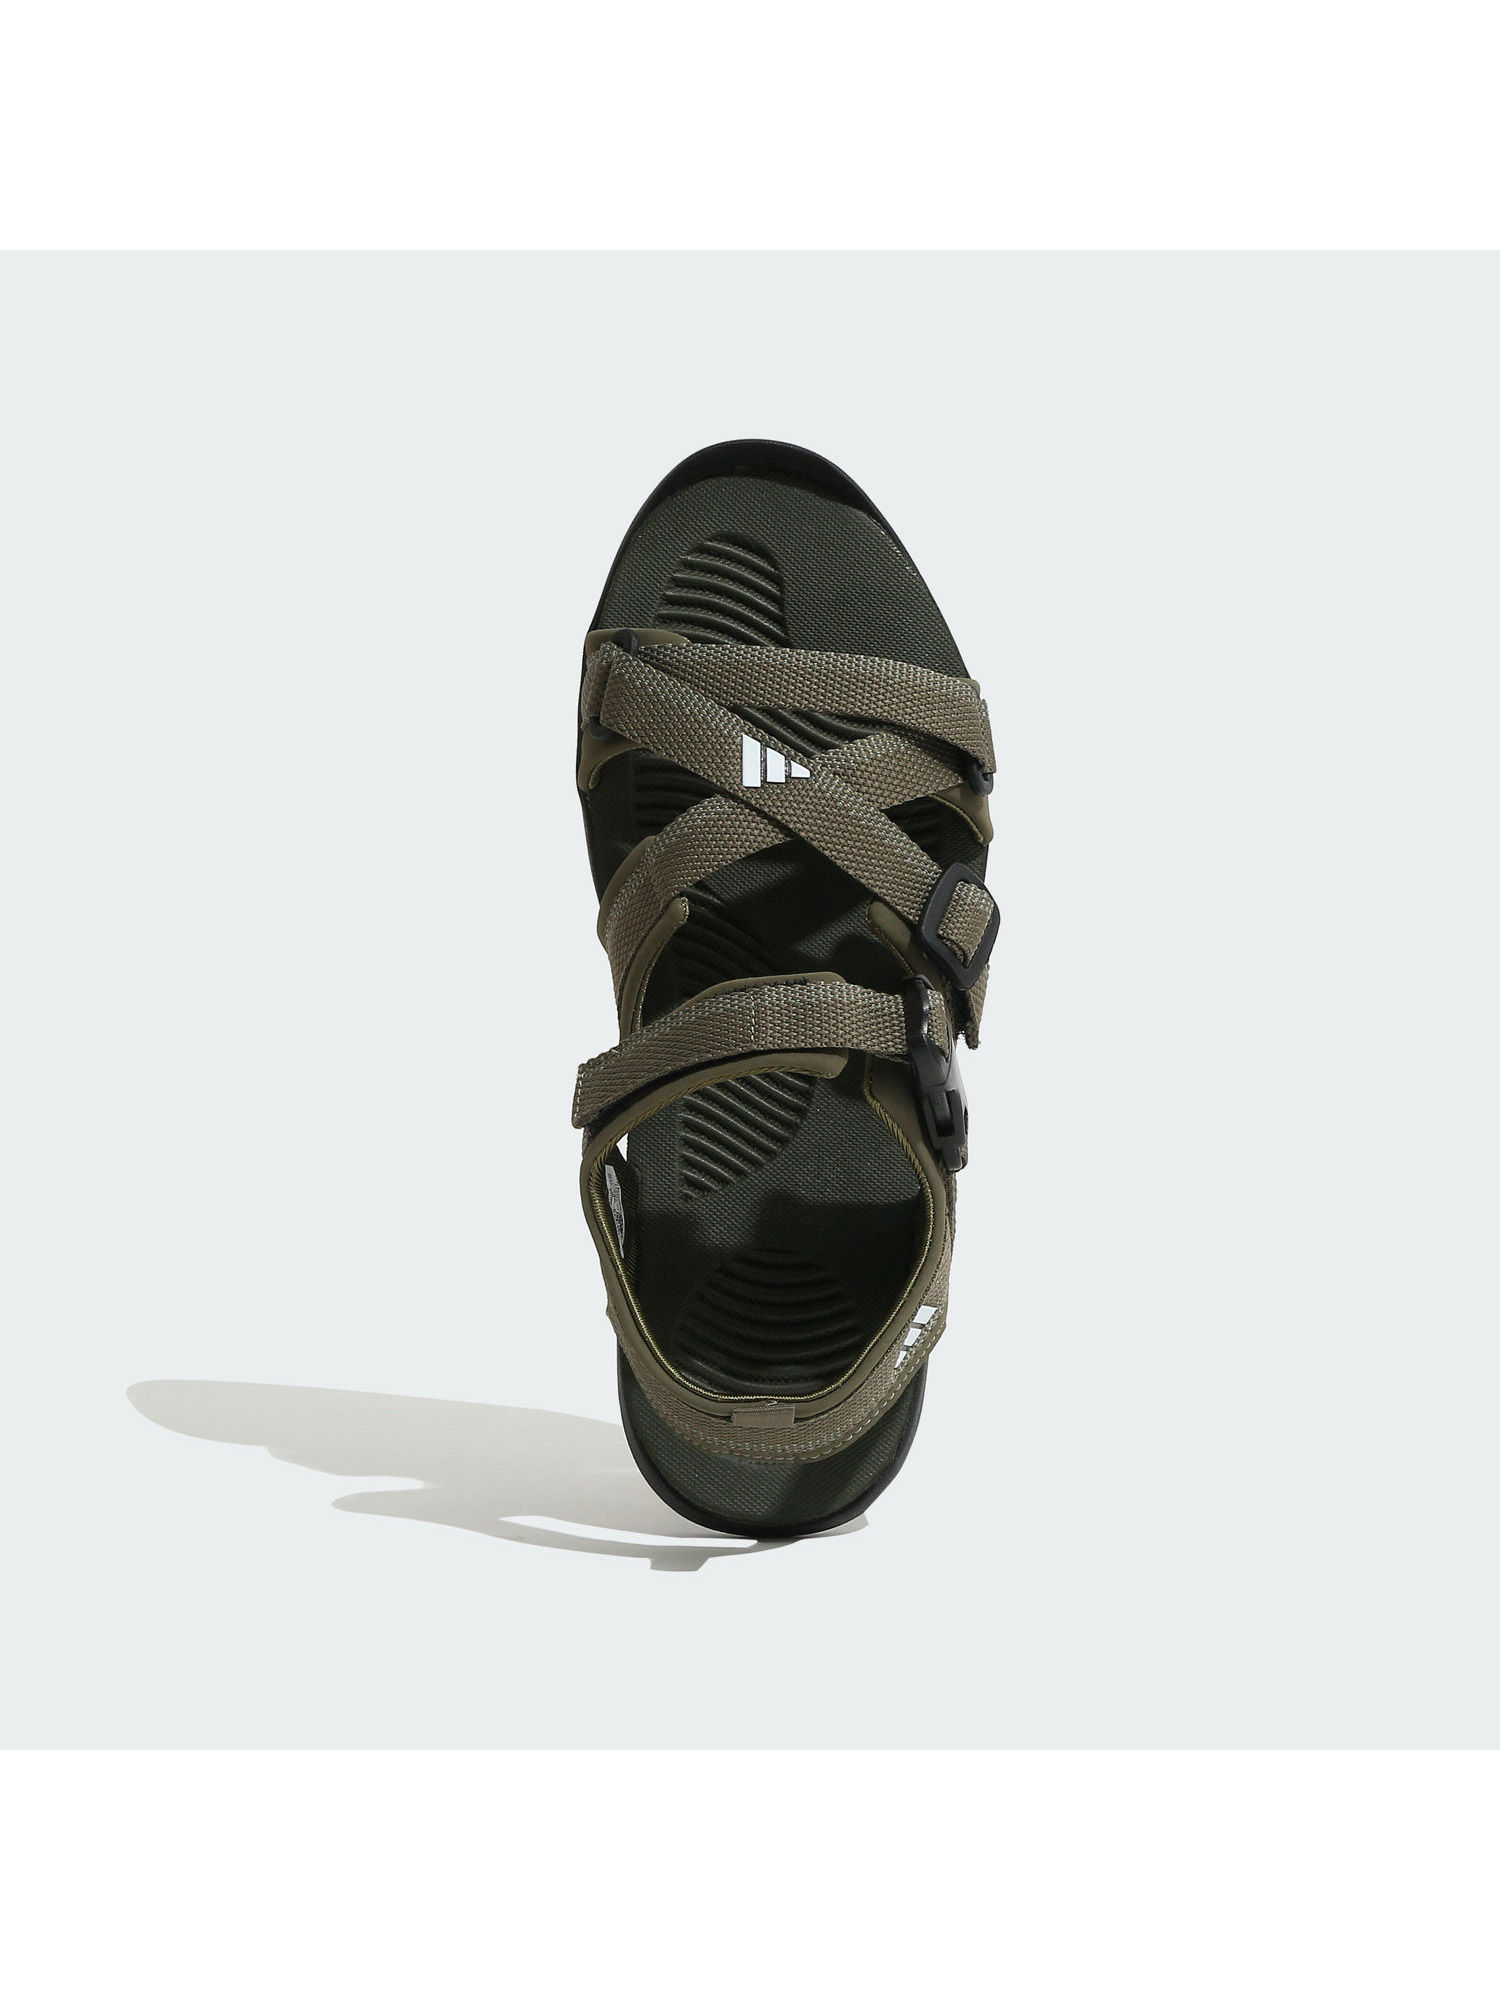 ADIDAS NU GLADI M Men Navy Sports Sandals - Buy ADIDAS NU GLADI M Men Navy  Sports Sandals Online at Best Price - Shop Online for Footwears in India |  Flipkart.com